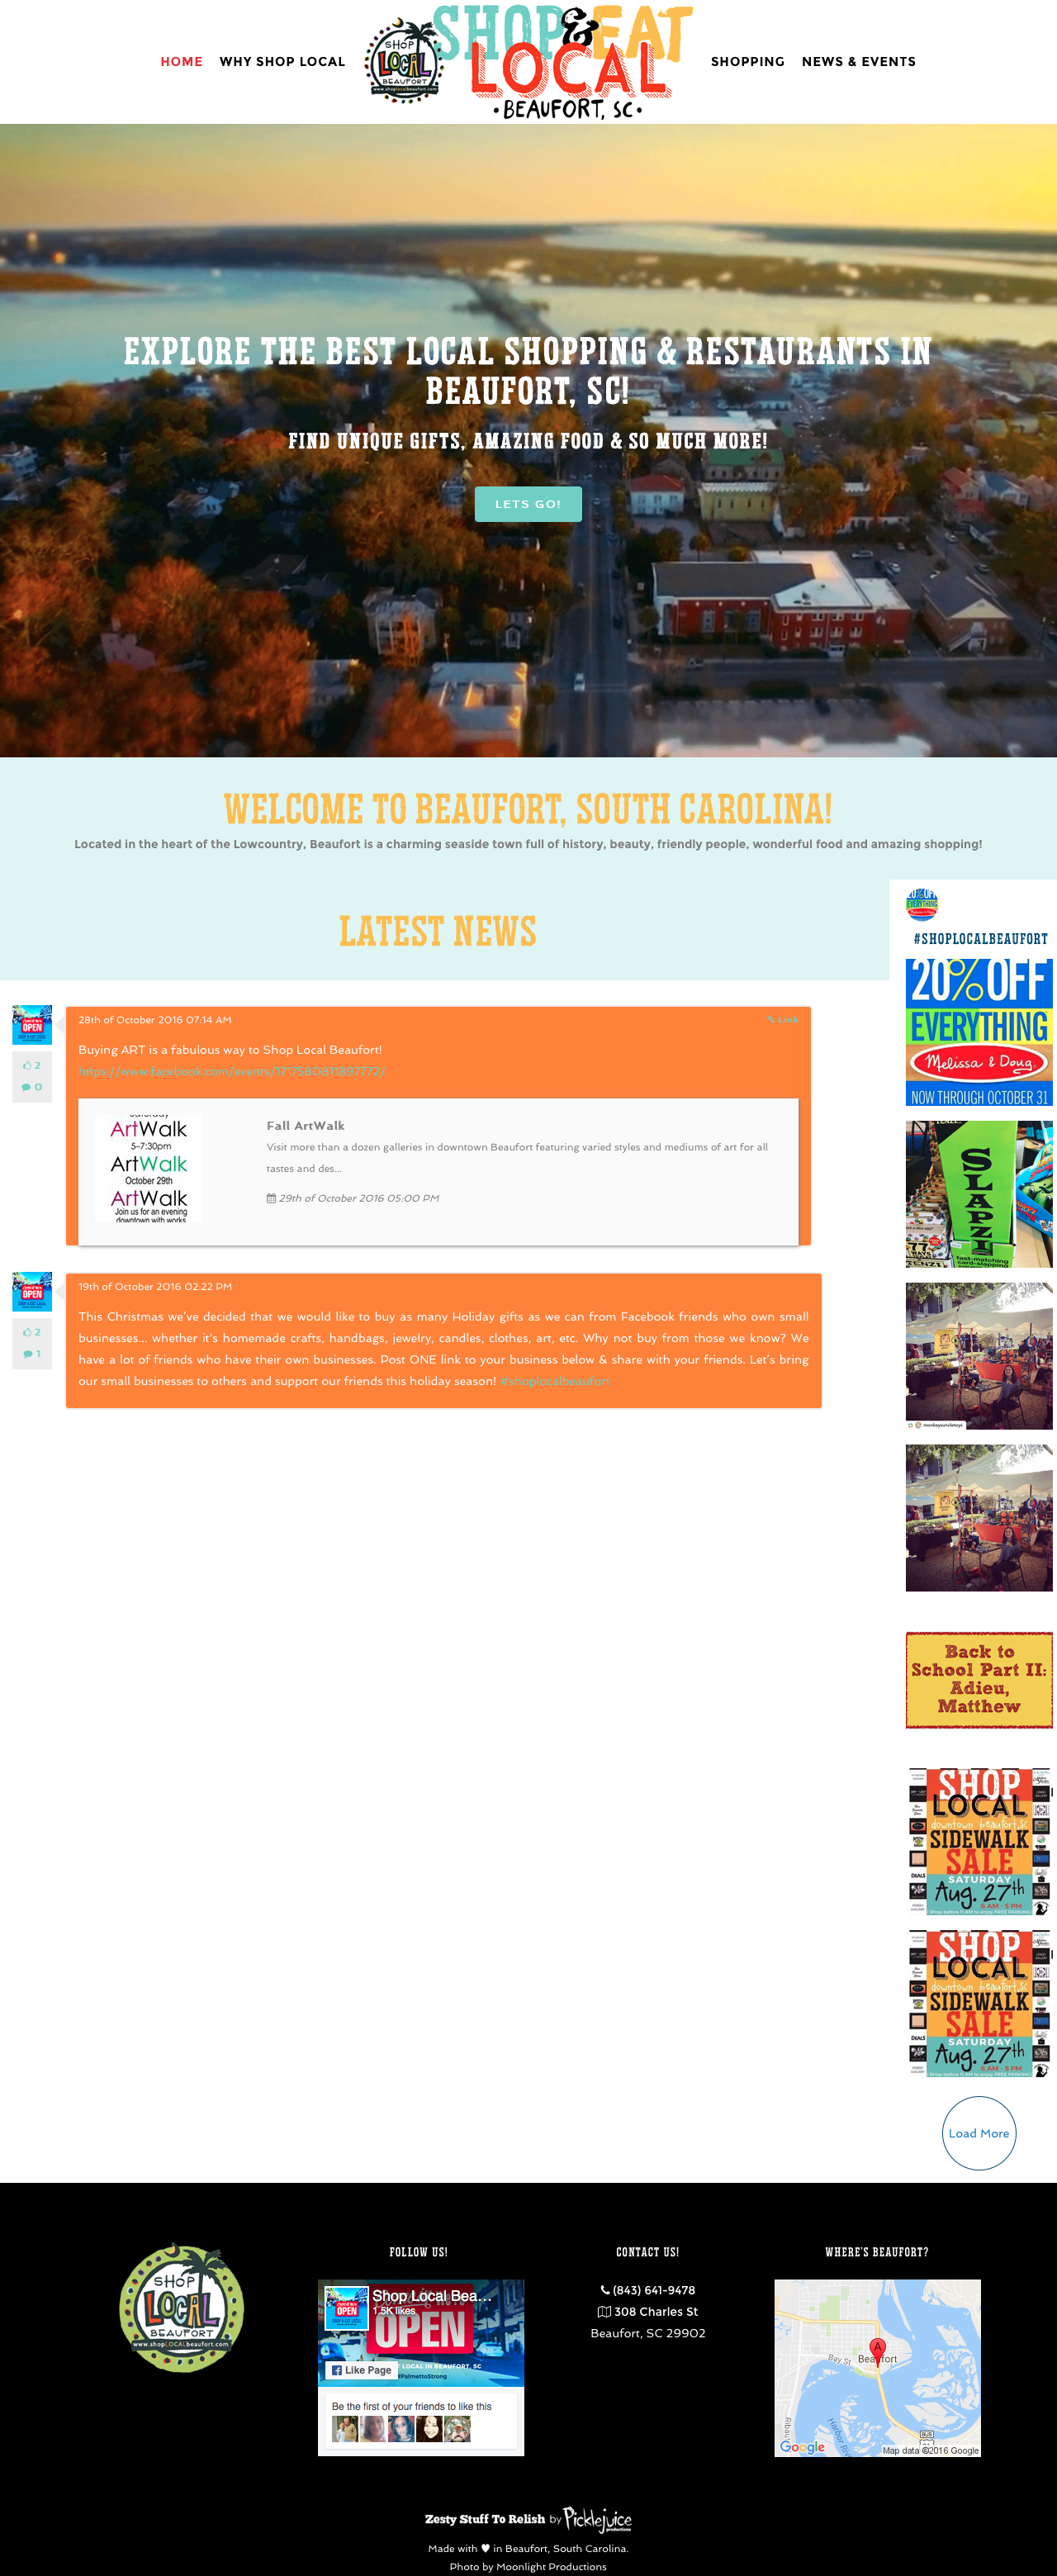 Beaufort South Carolina, USA | Shop & Eat Local | PickleJuice Productions